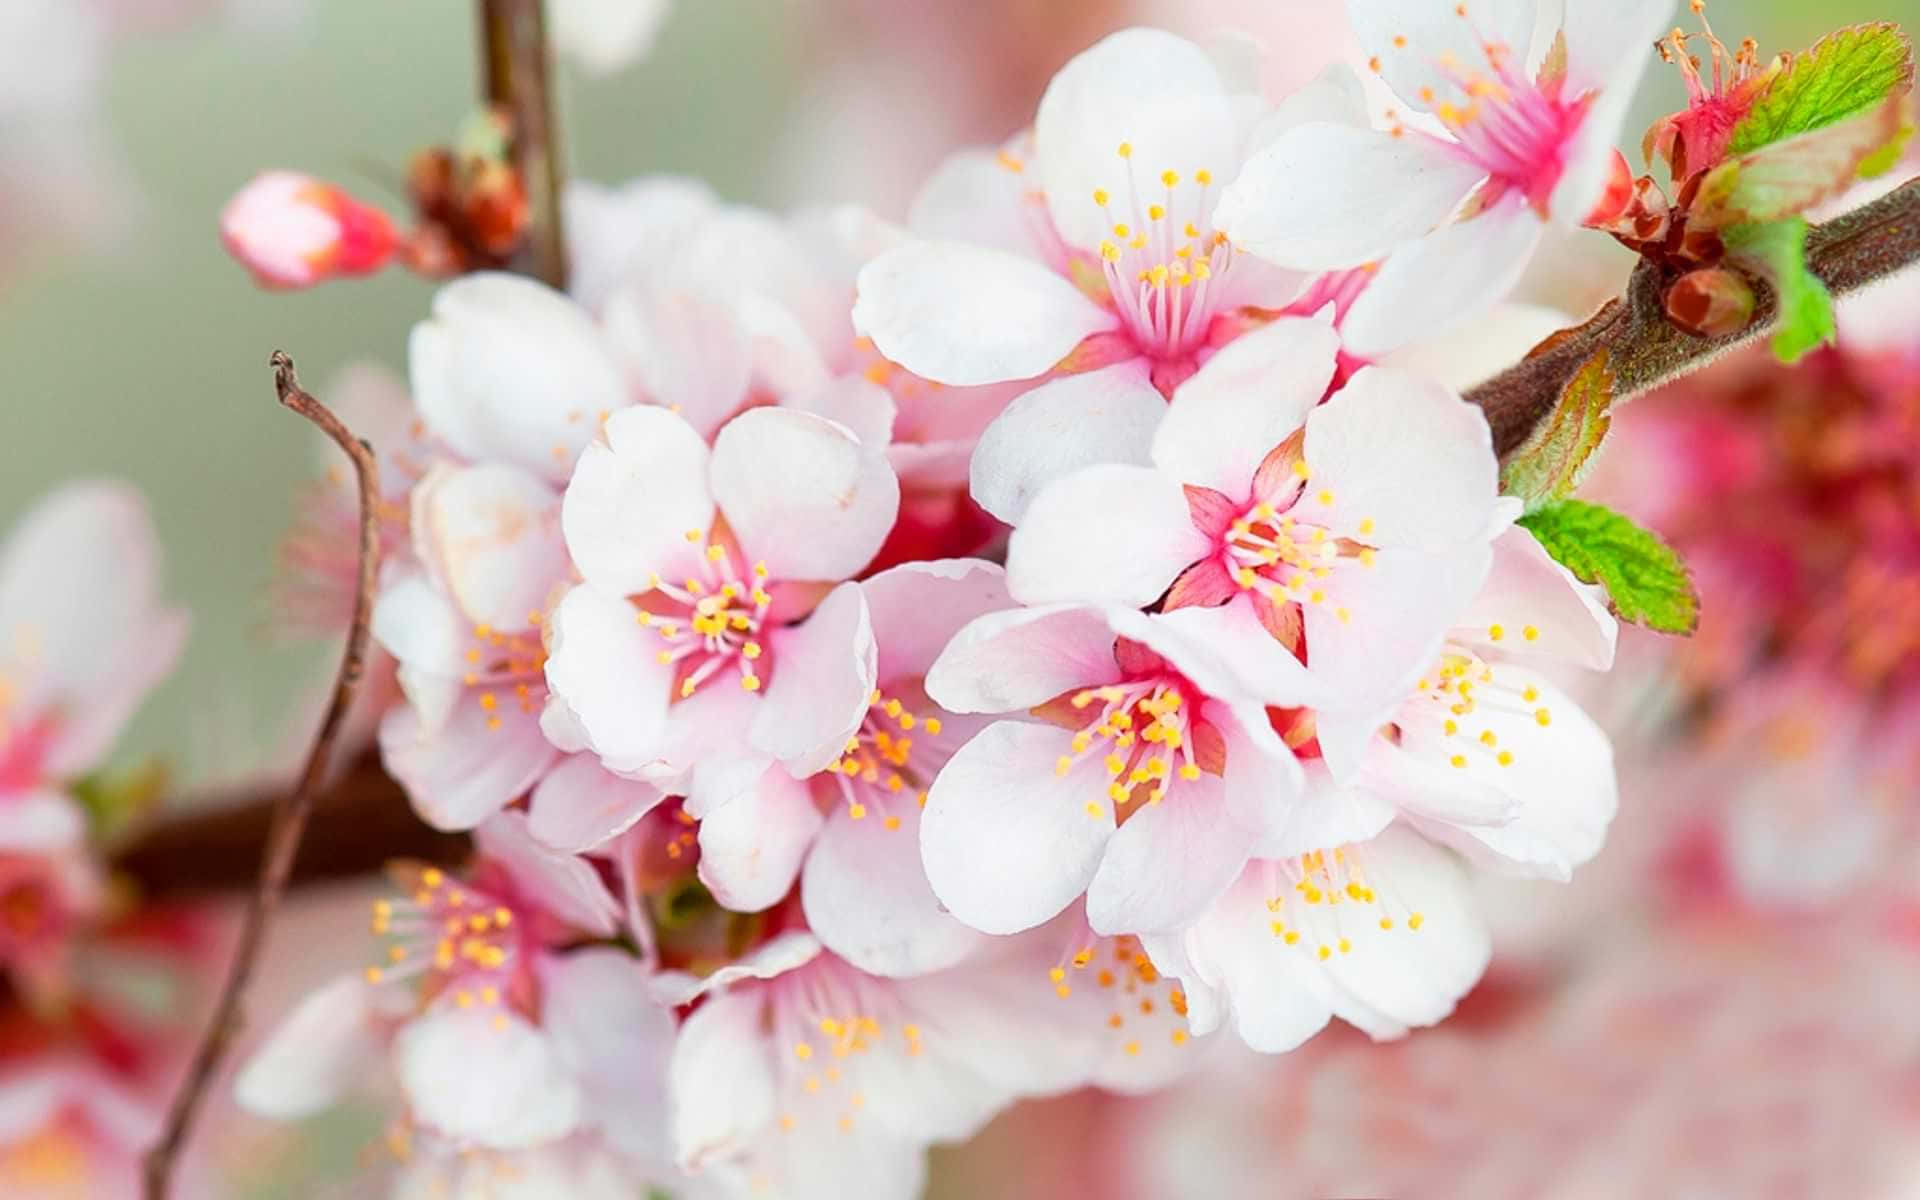 Vibrant Cherry Blossoms Closeup.jpg Wallpaper